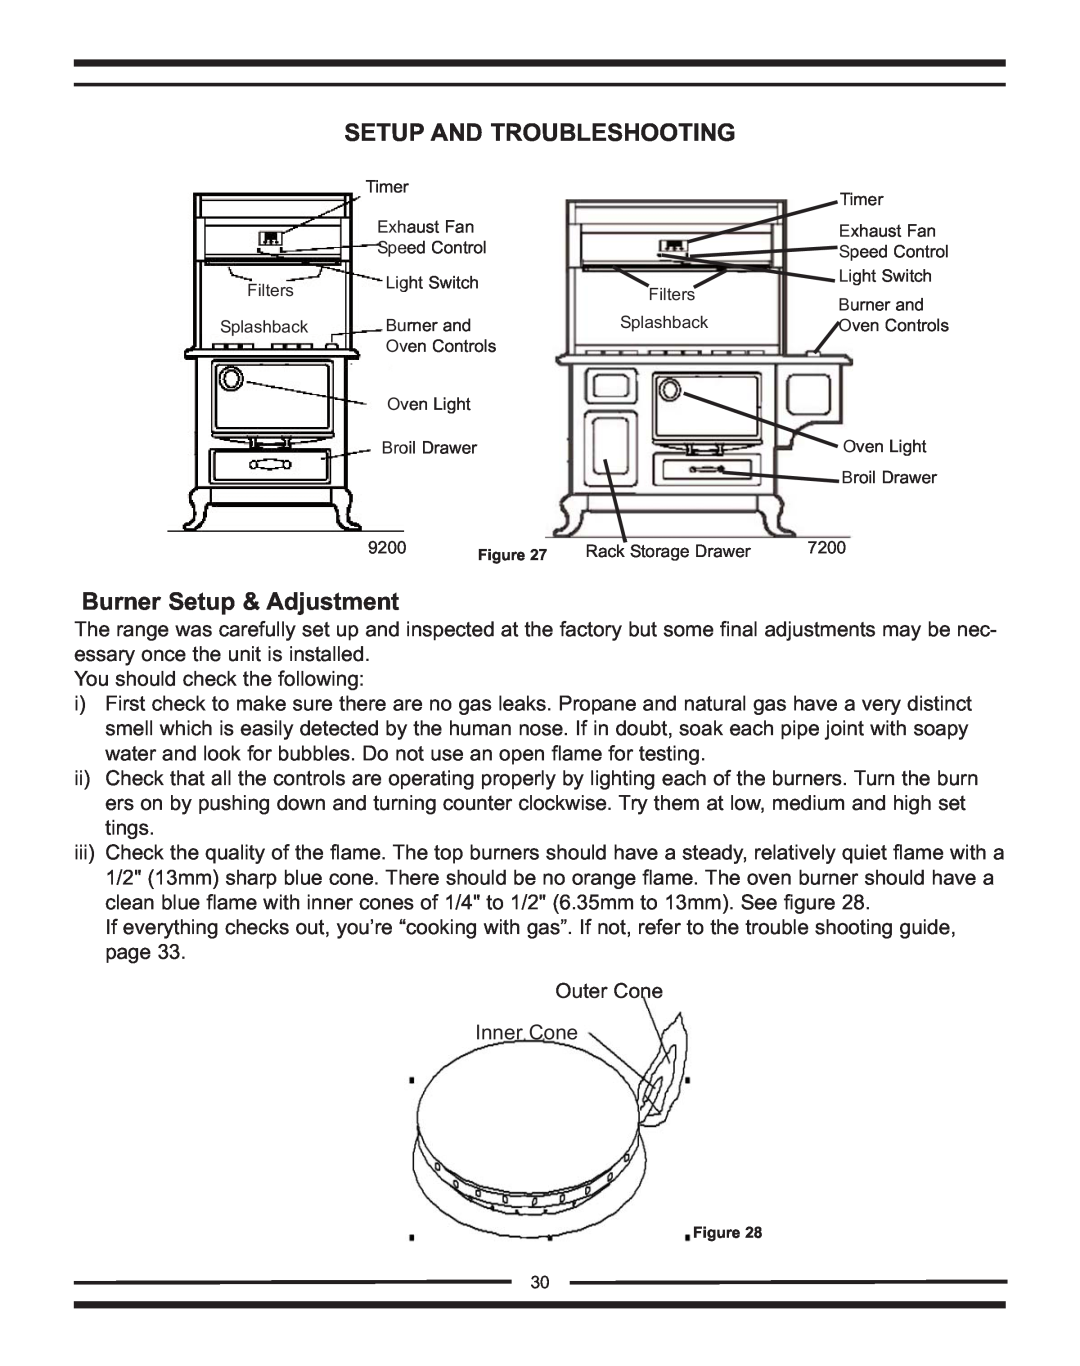 Heartland Bakeware 9200/7200 manual Setup And Troubleshooting, Burner Setup & Adjustment 